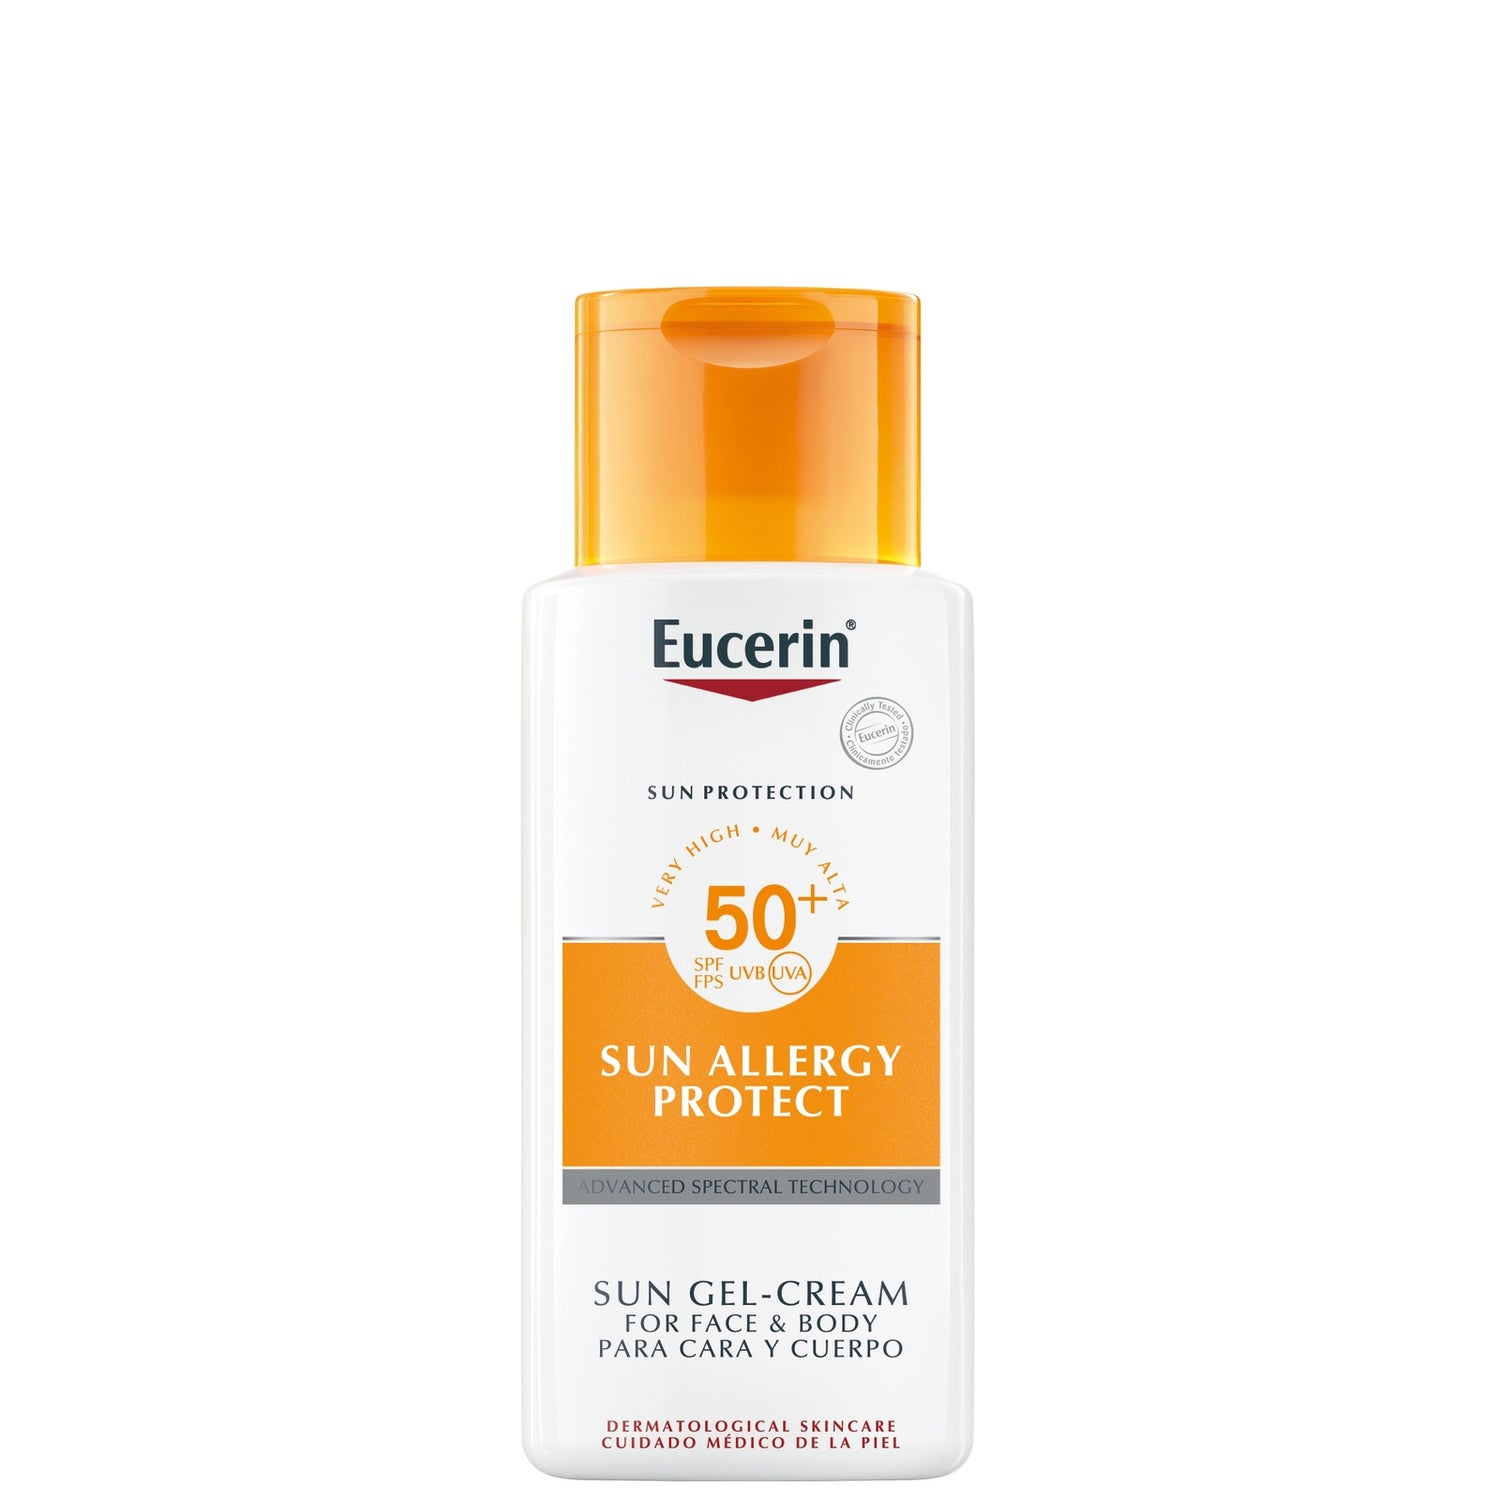 Eucerin Sensitive Protect Sun Lotion Extra Light SPF 50+ 150 ml